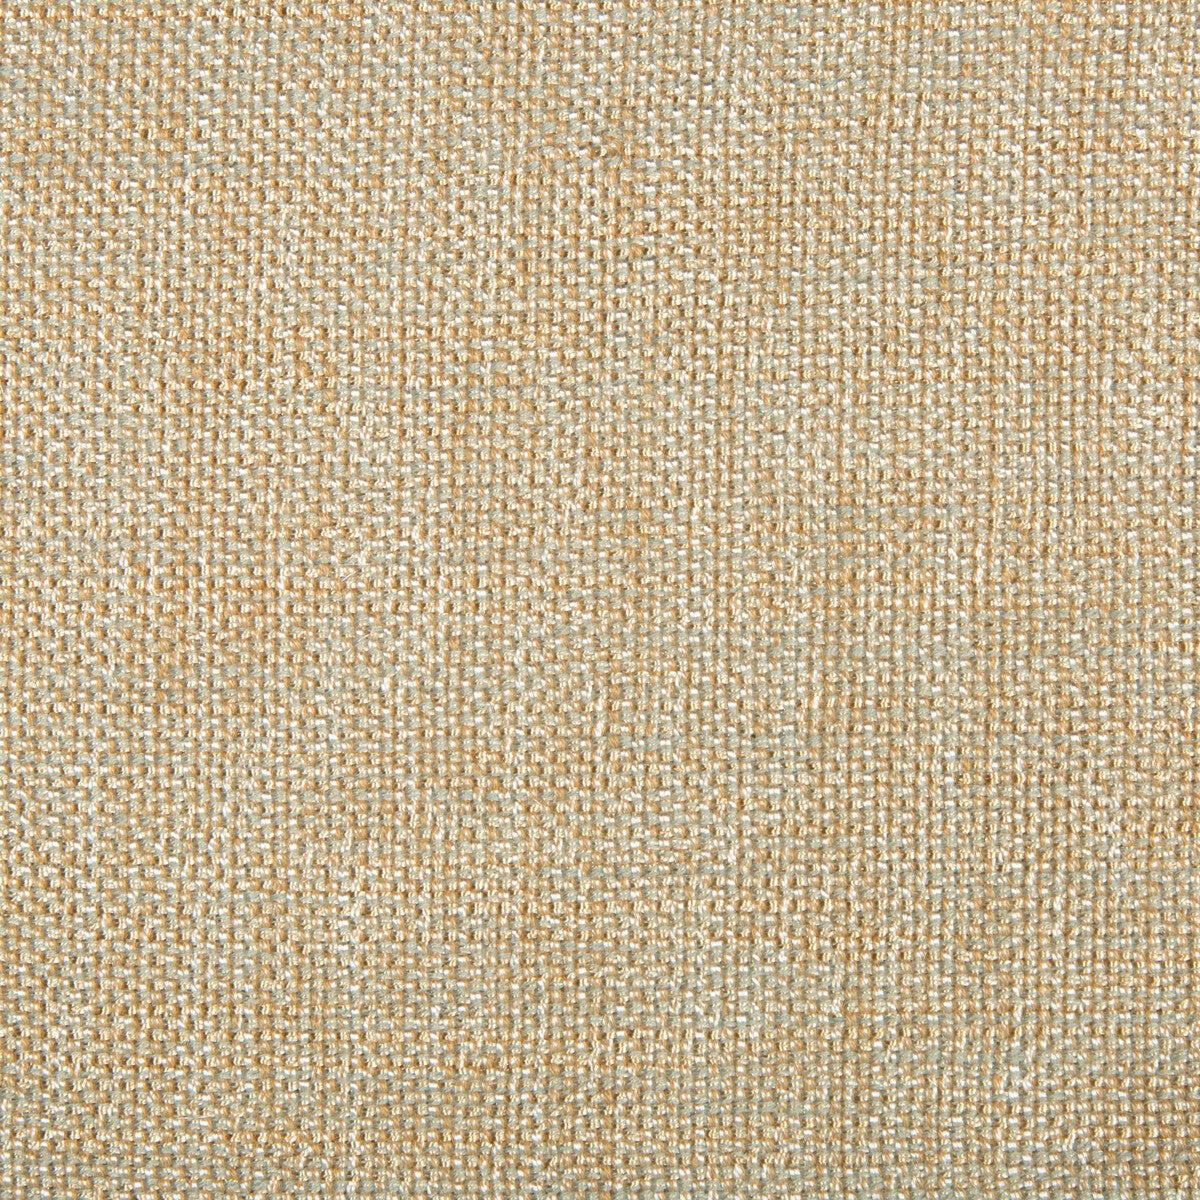 Kravet Smart fabric in 34939-1611 color - pattern 34939.1611.0 - by Kravet Smart